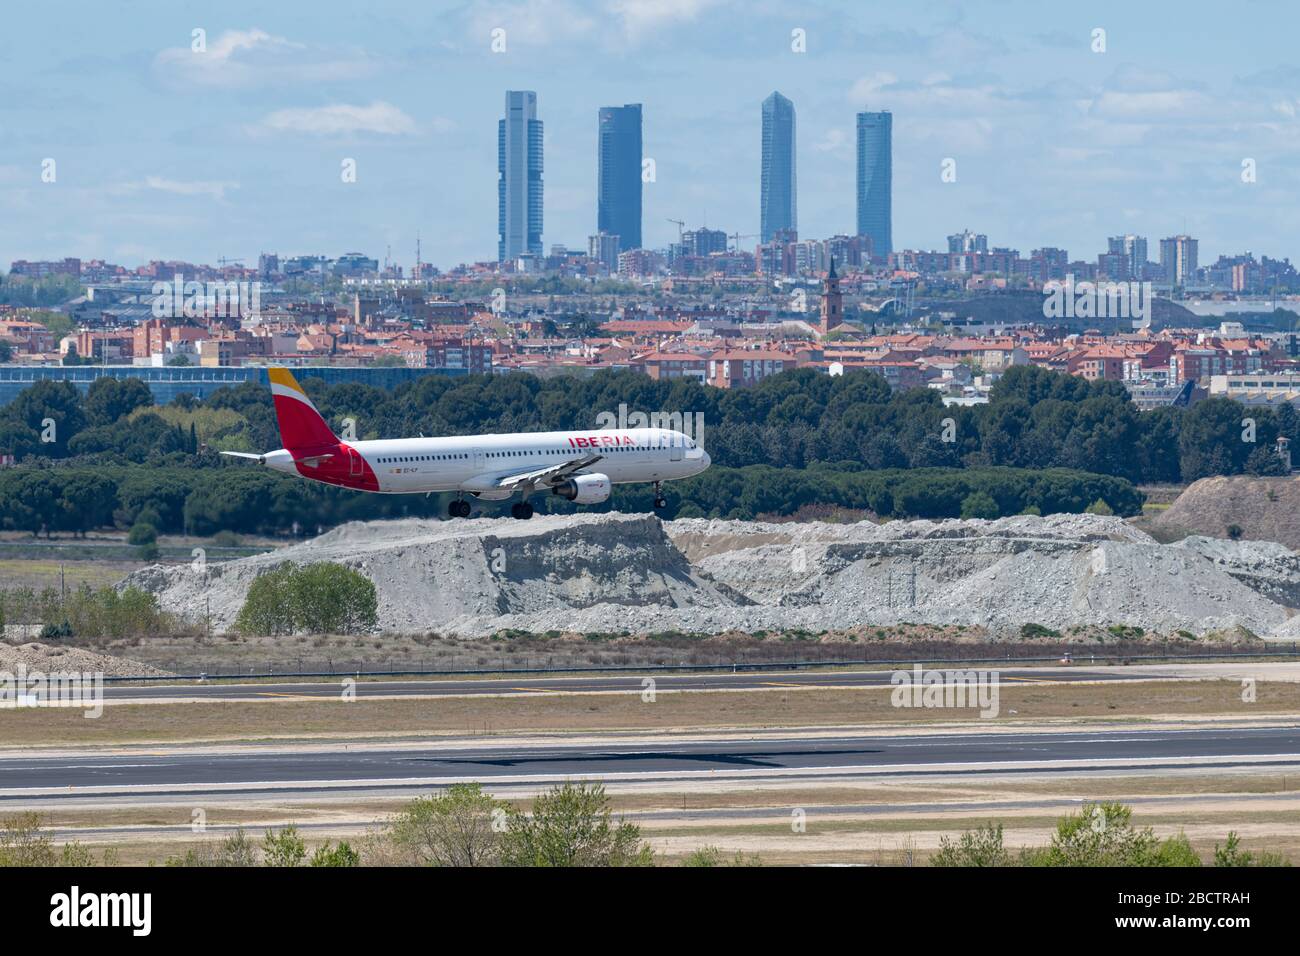 MADRID, SPAIN - APRIL 14, 2019: Iberia Airlines Airbus A320 passenger plane landing at Madrid-Barajas International Airport Adolfo Suarez In the backg Stock Photo